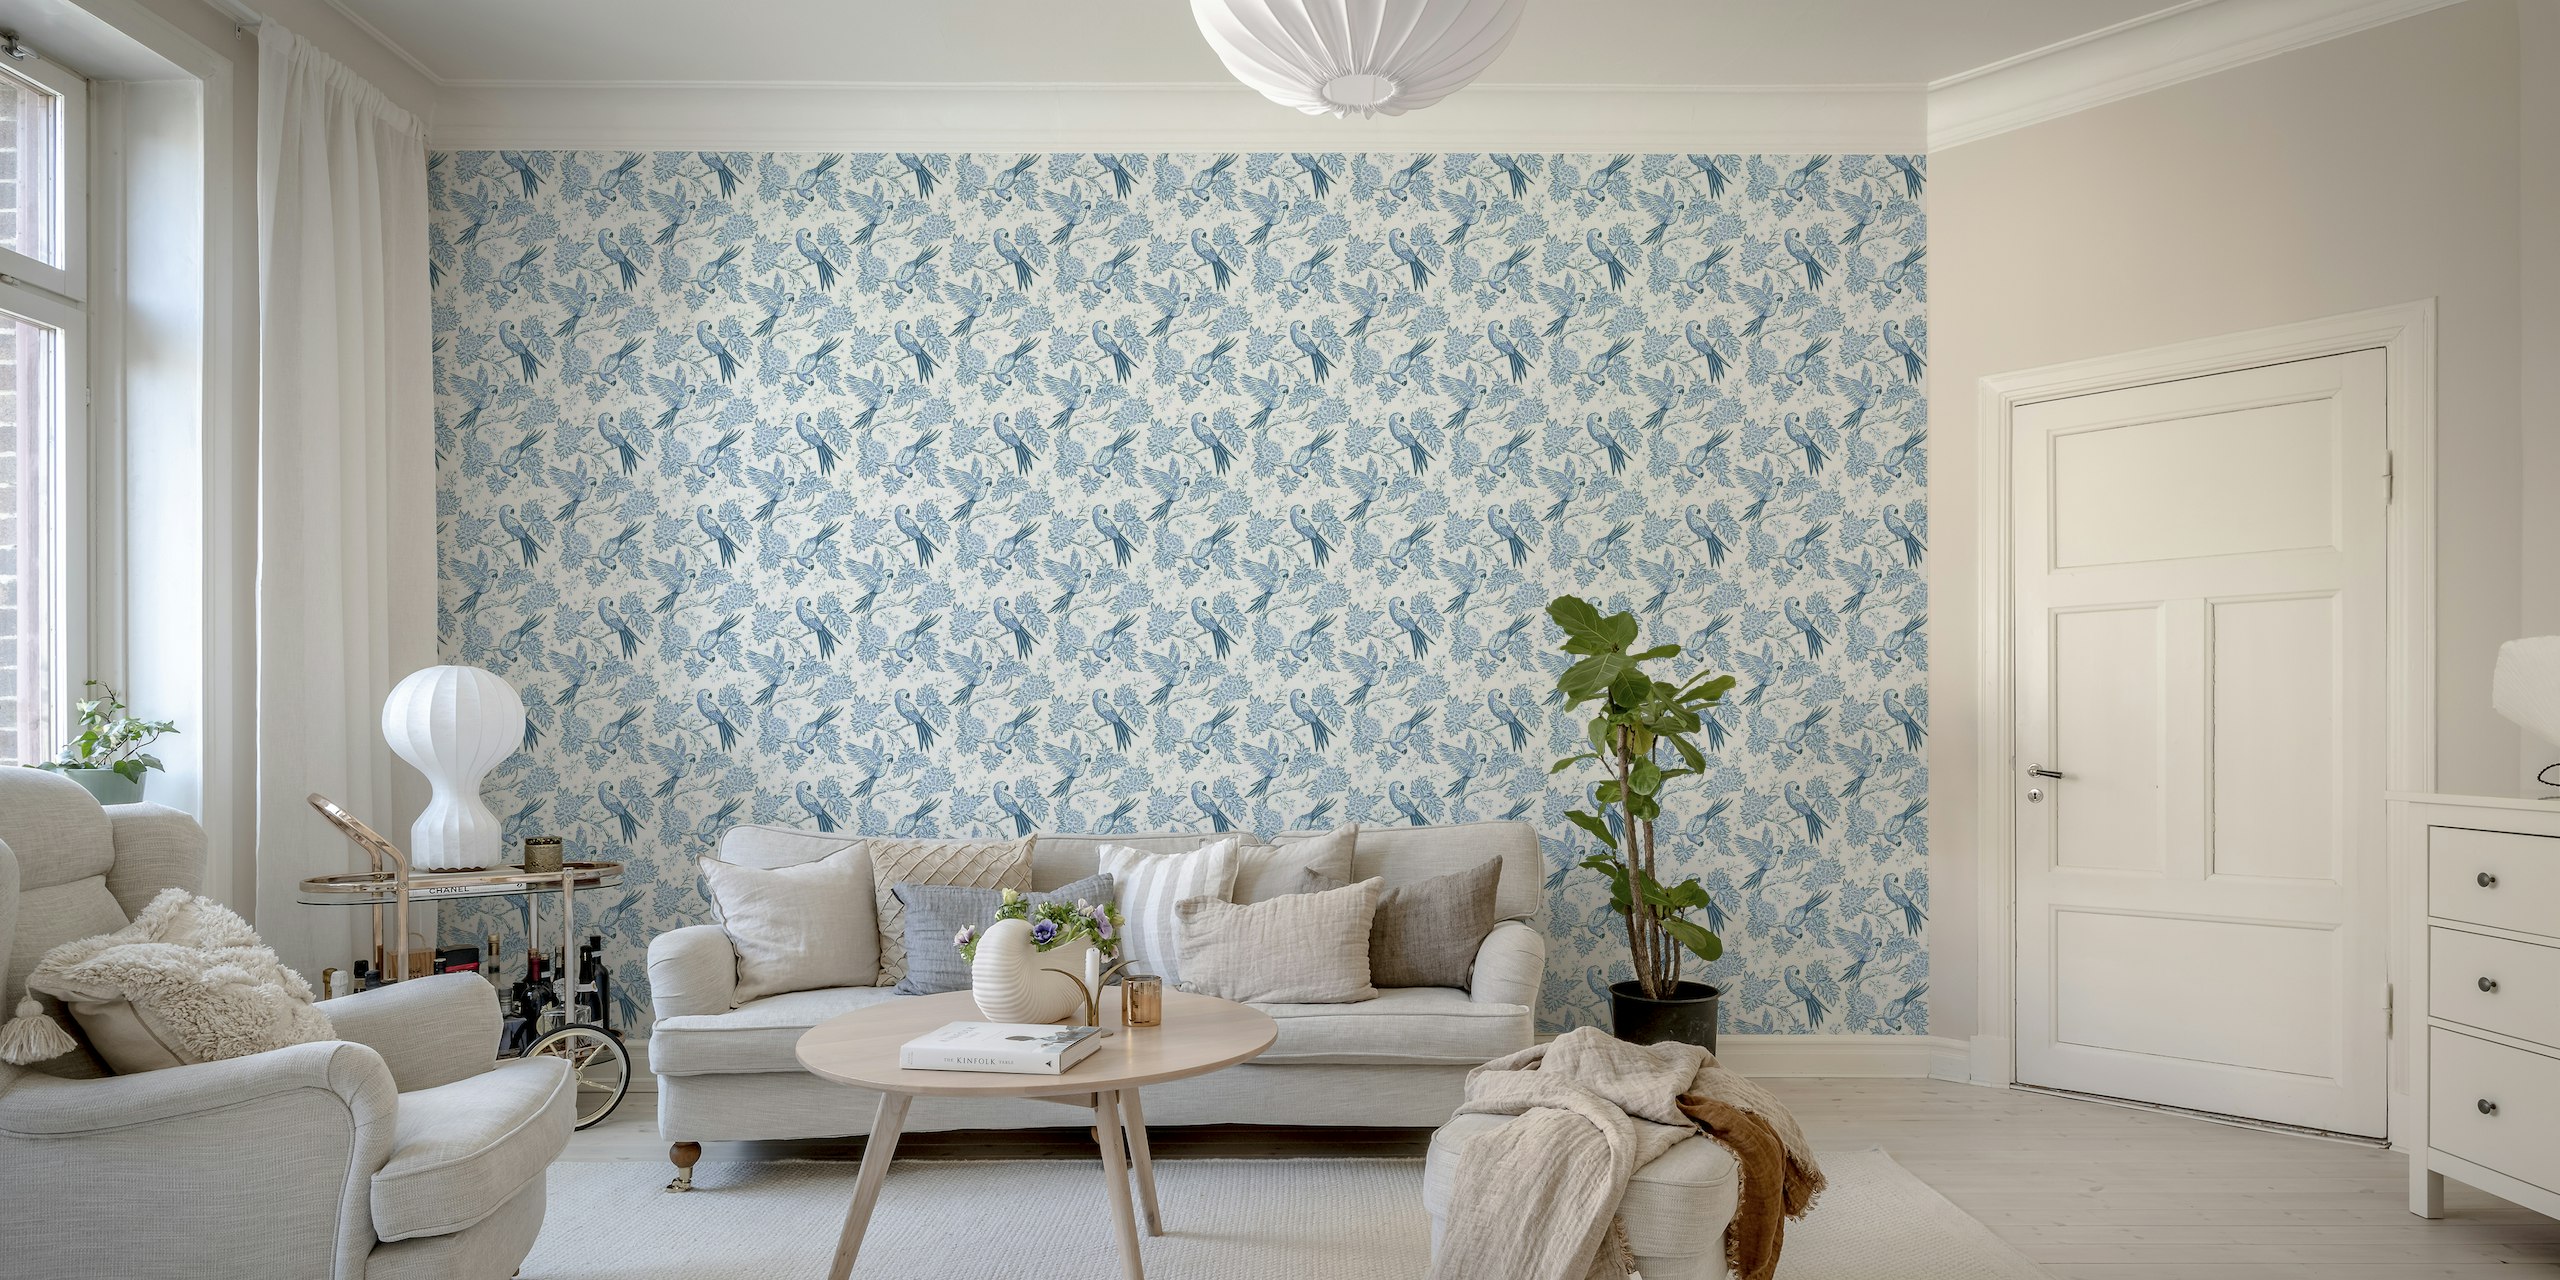 Parrot garden - blue and white papel de parede